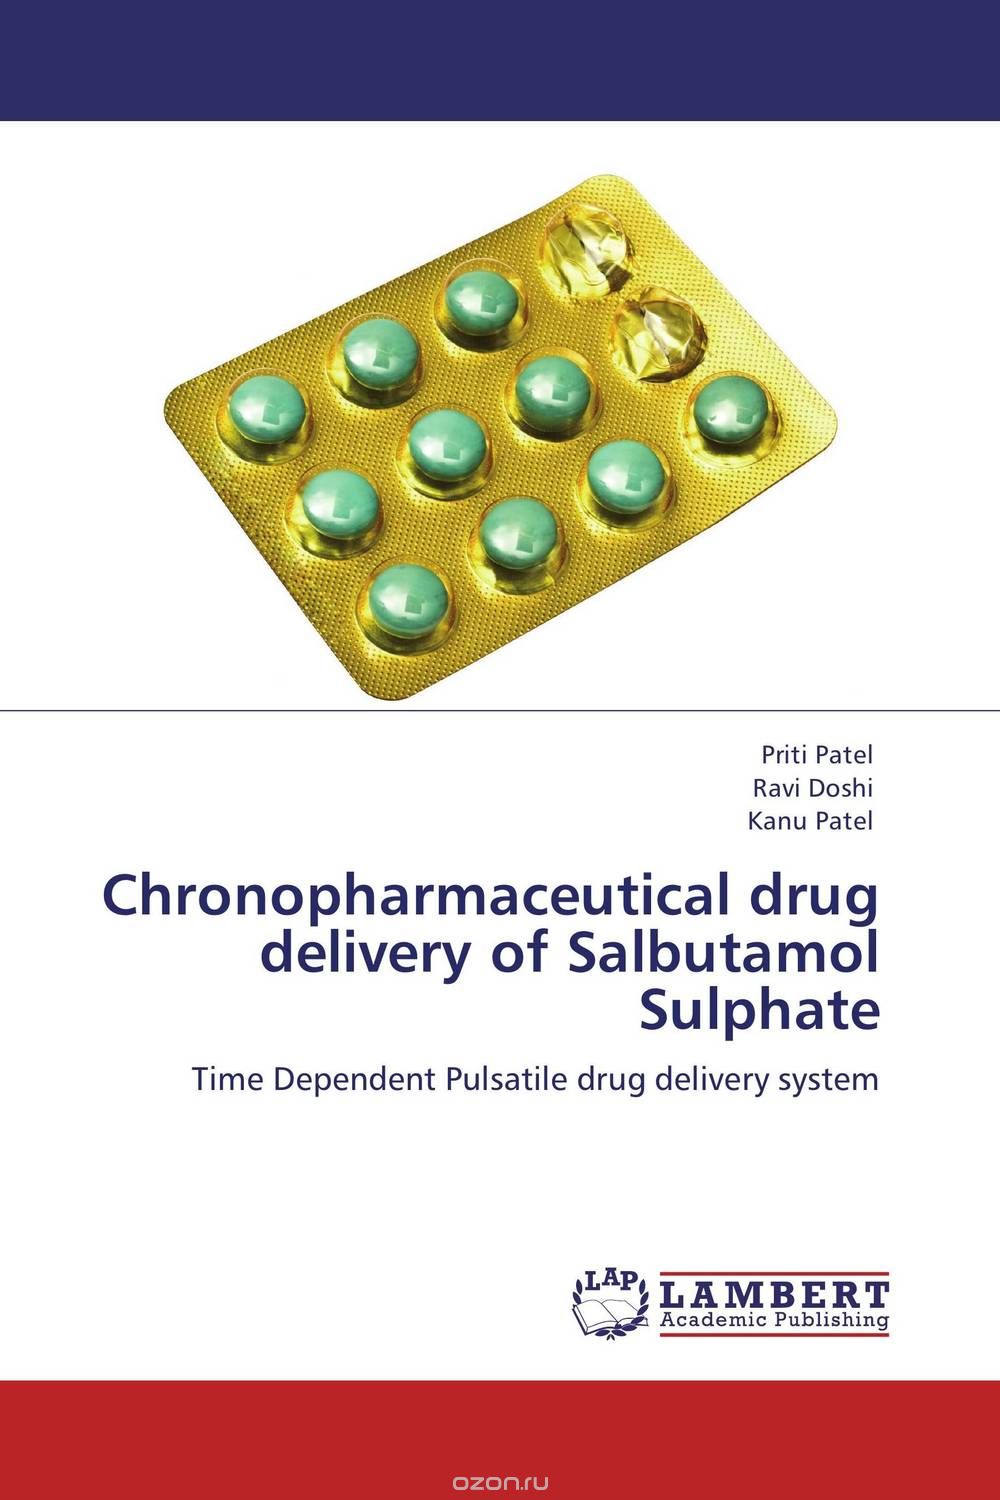 Скачать книгу "Chronopharmaceutical drug delivery of Salbutamol Sulphate"